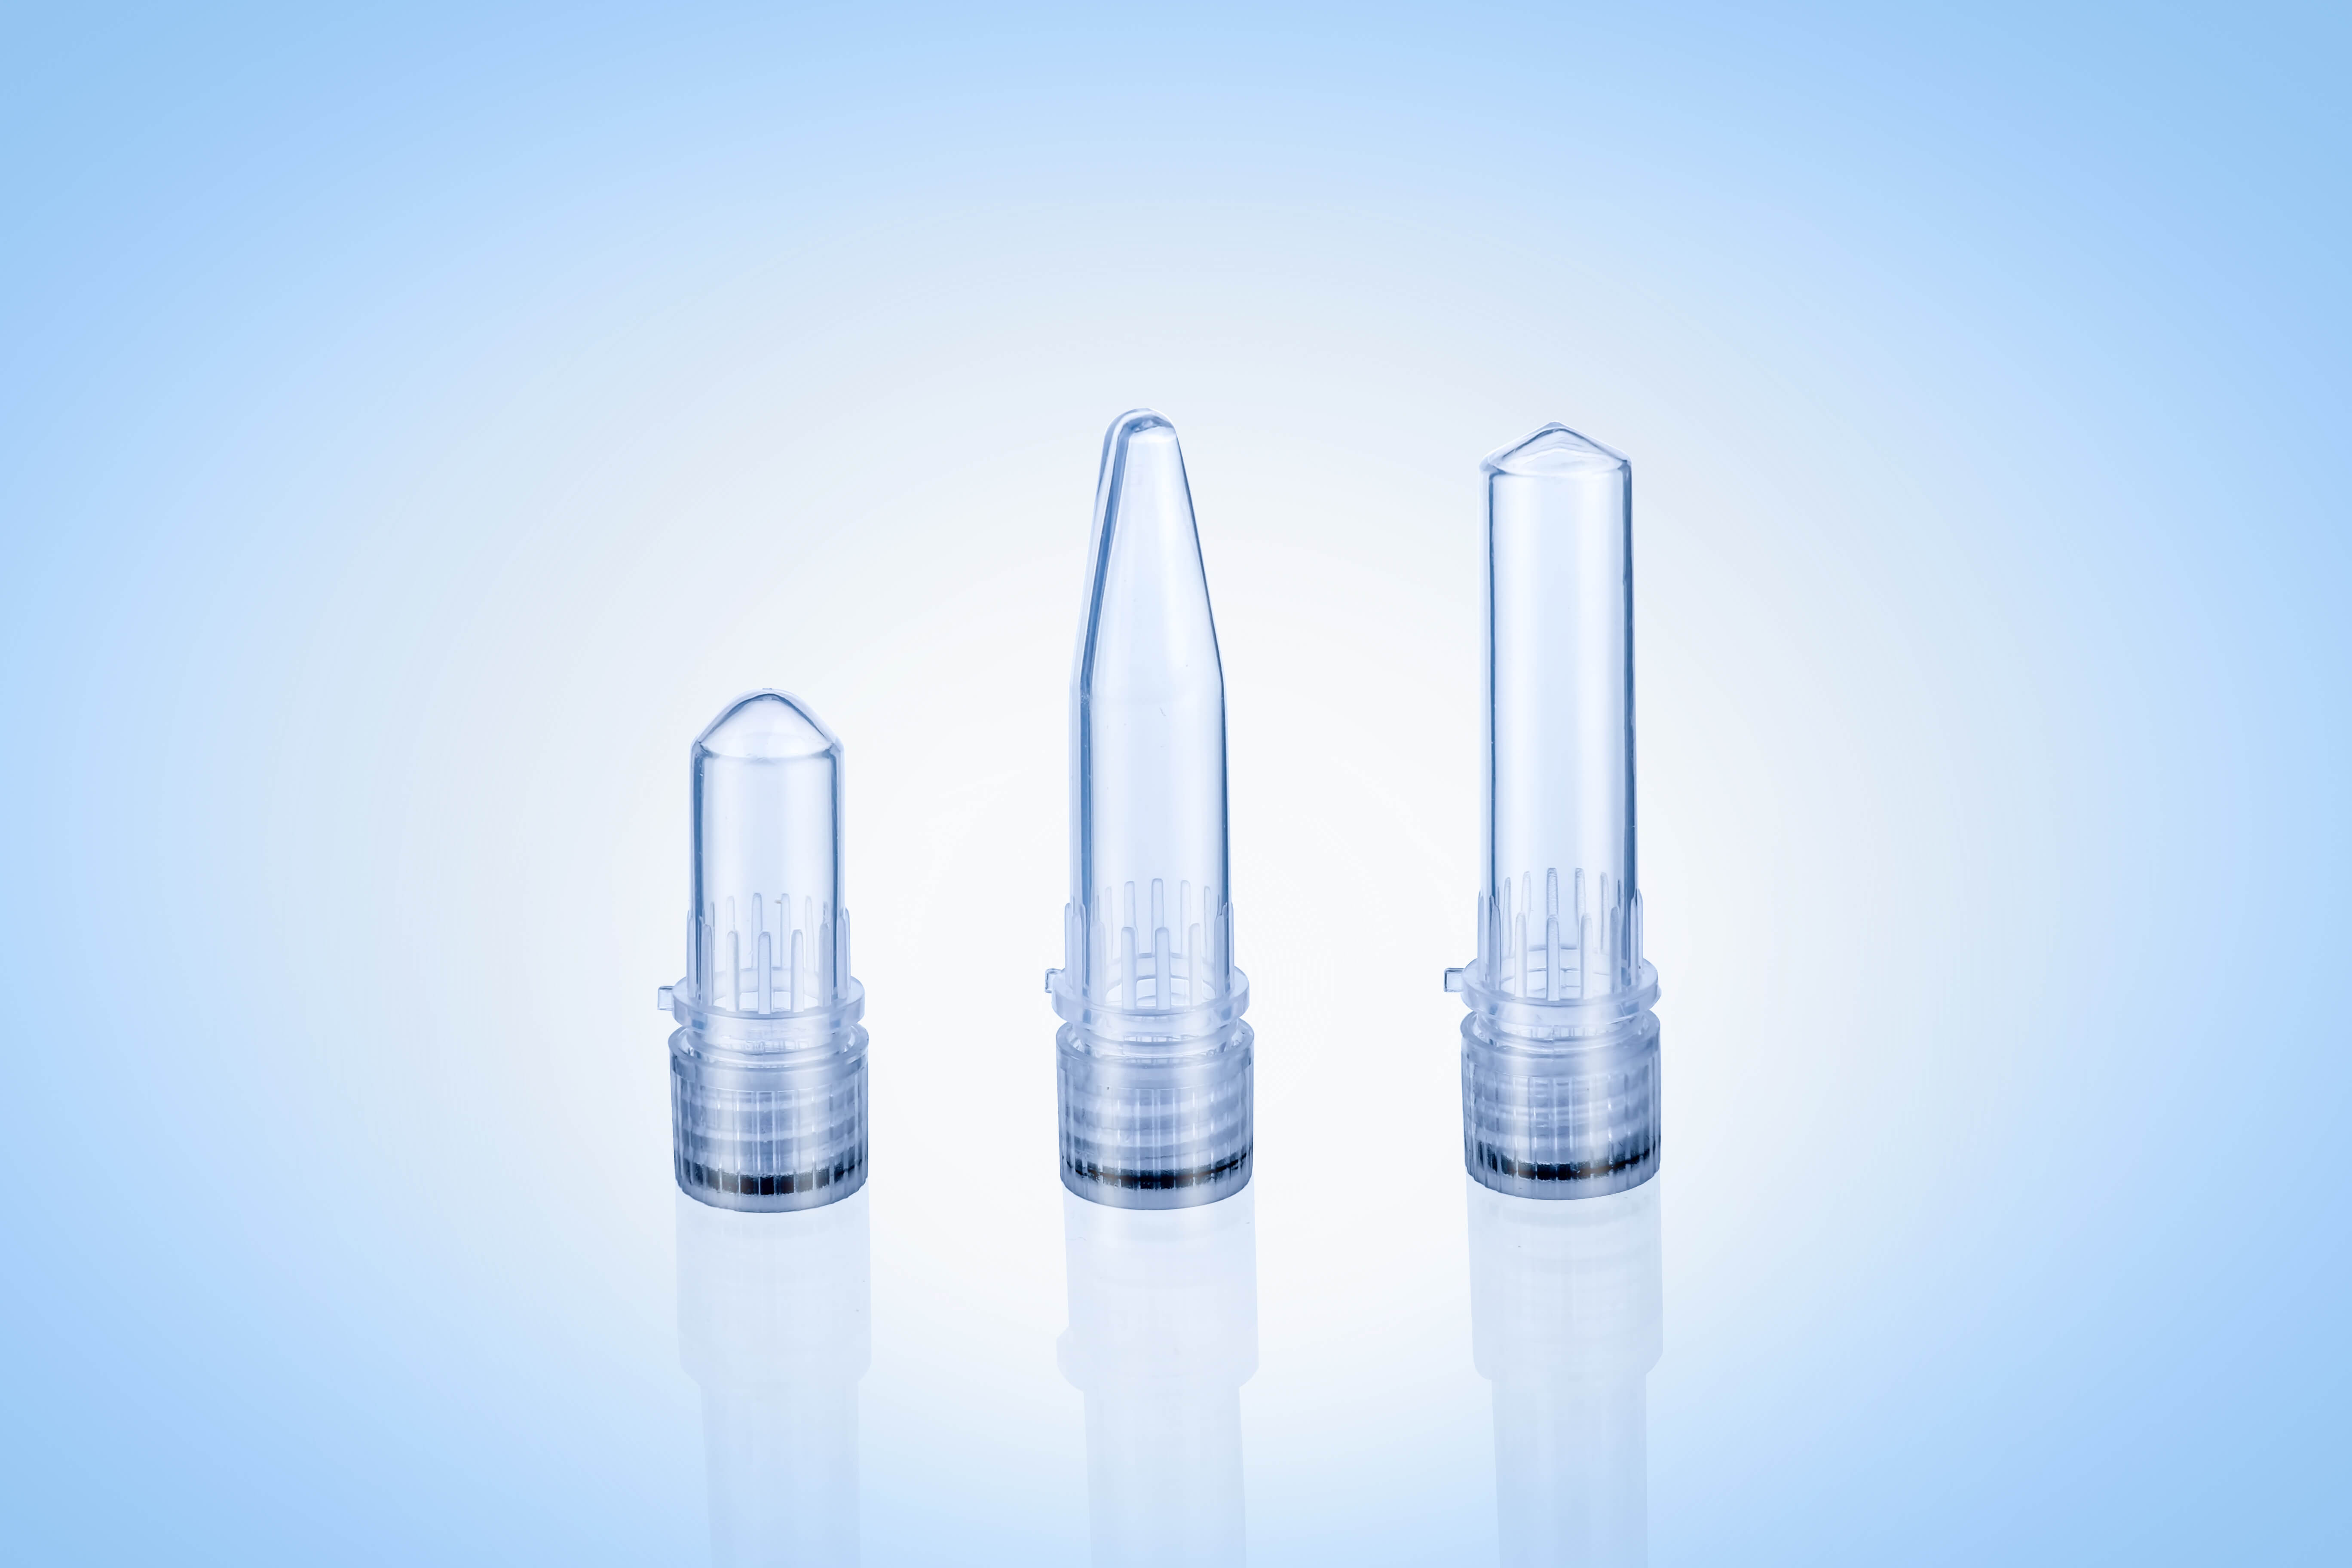 Cryo vial 0.5ml concial Polypropylene Internal Thread With a silicone gasket, Sterile